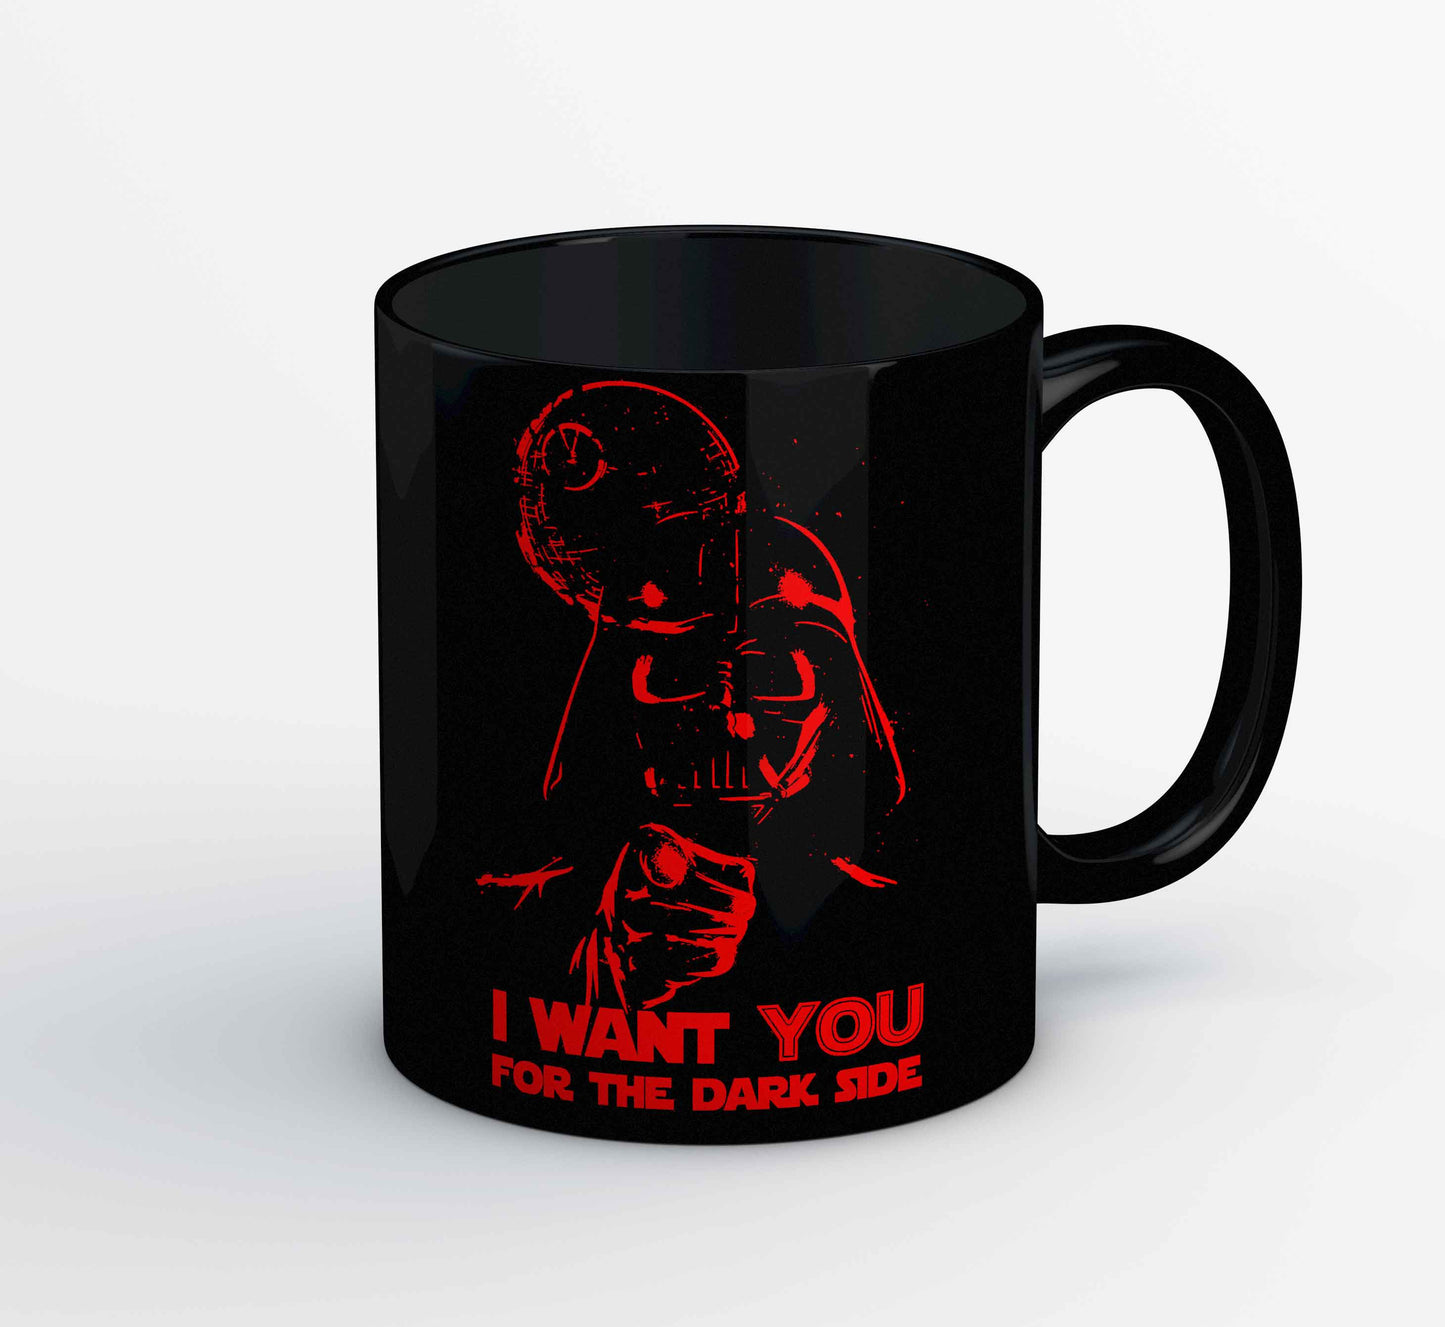 star wars i want you for the dark side mug coffee ceramic tv & movies buy online india the banyan tee tbt men women girls boys unisex  darth vader